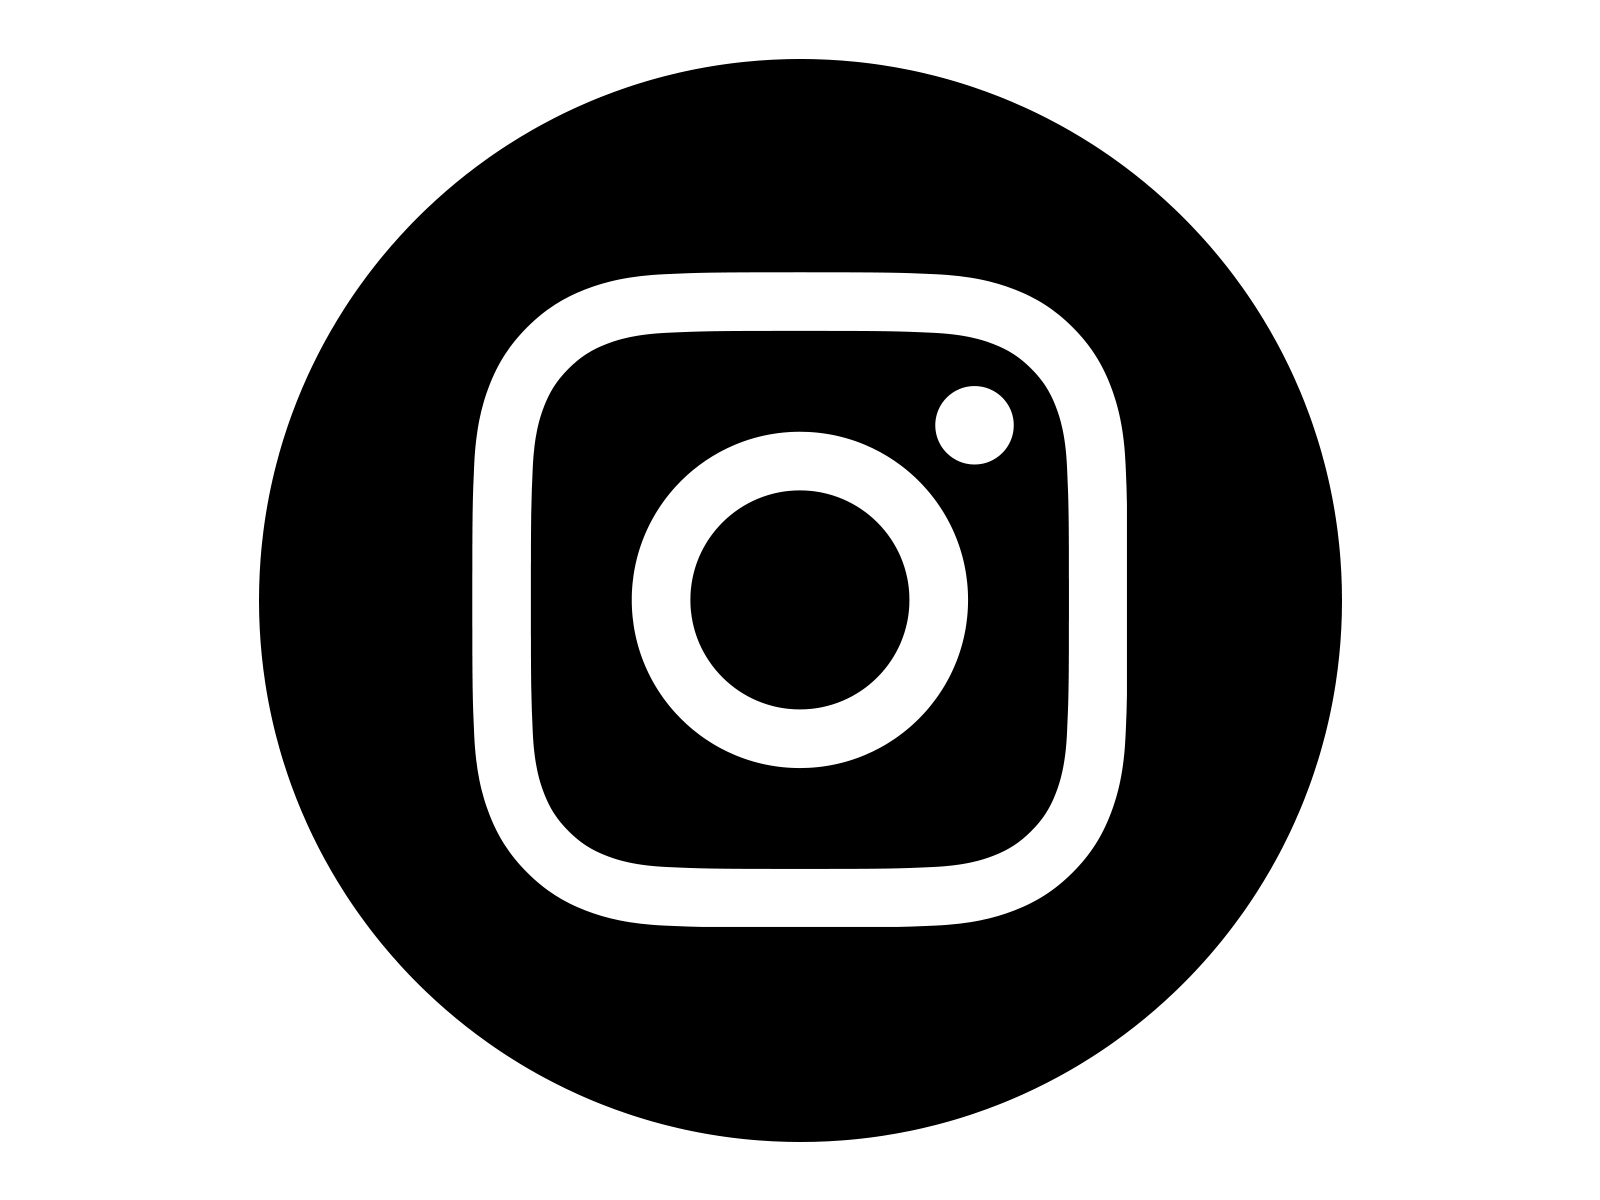 White Instagram Logo - Instagram Icon White on Black Circle | png in 2019 | Instagram logo ...